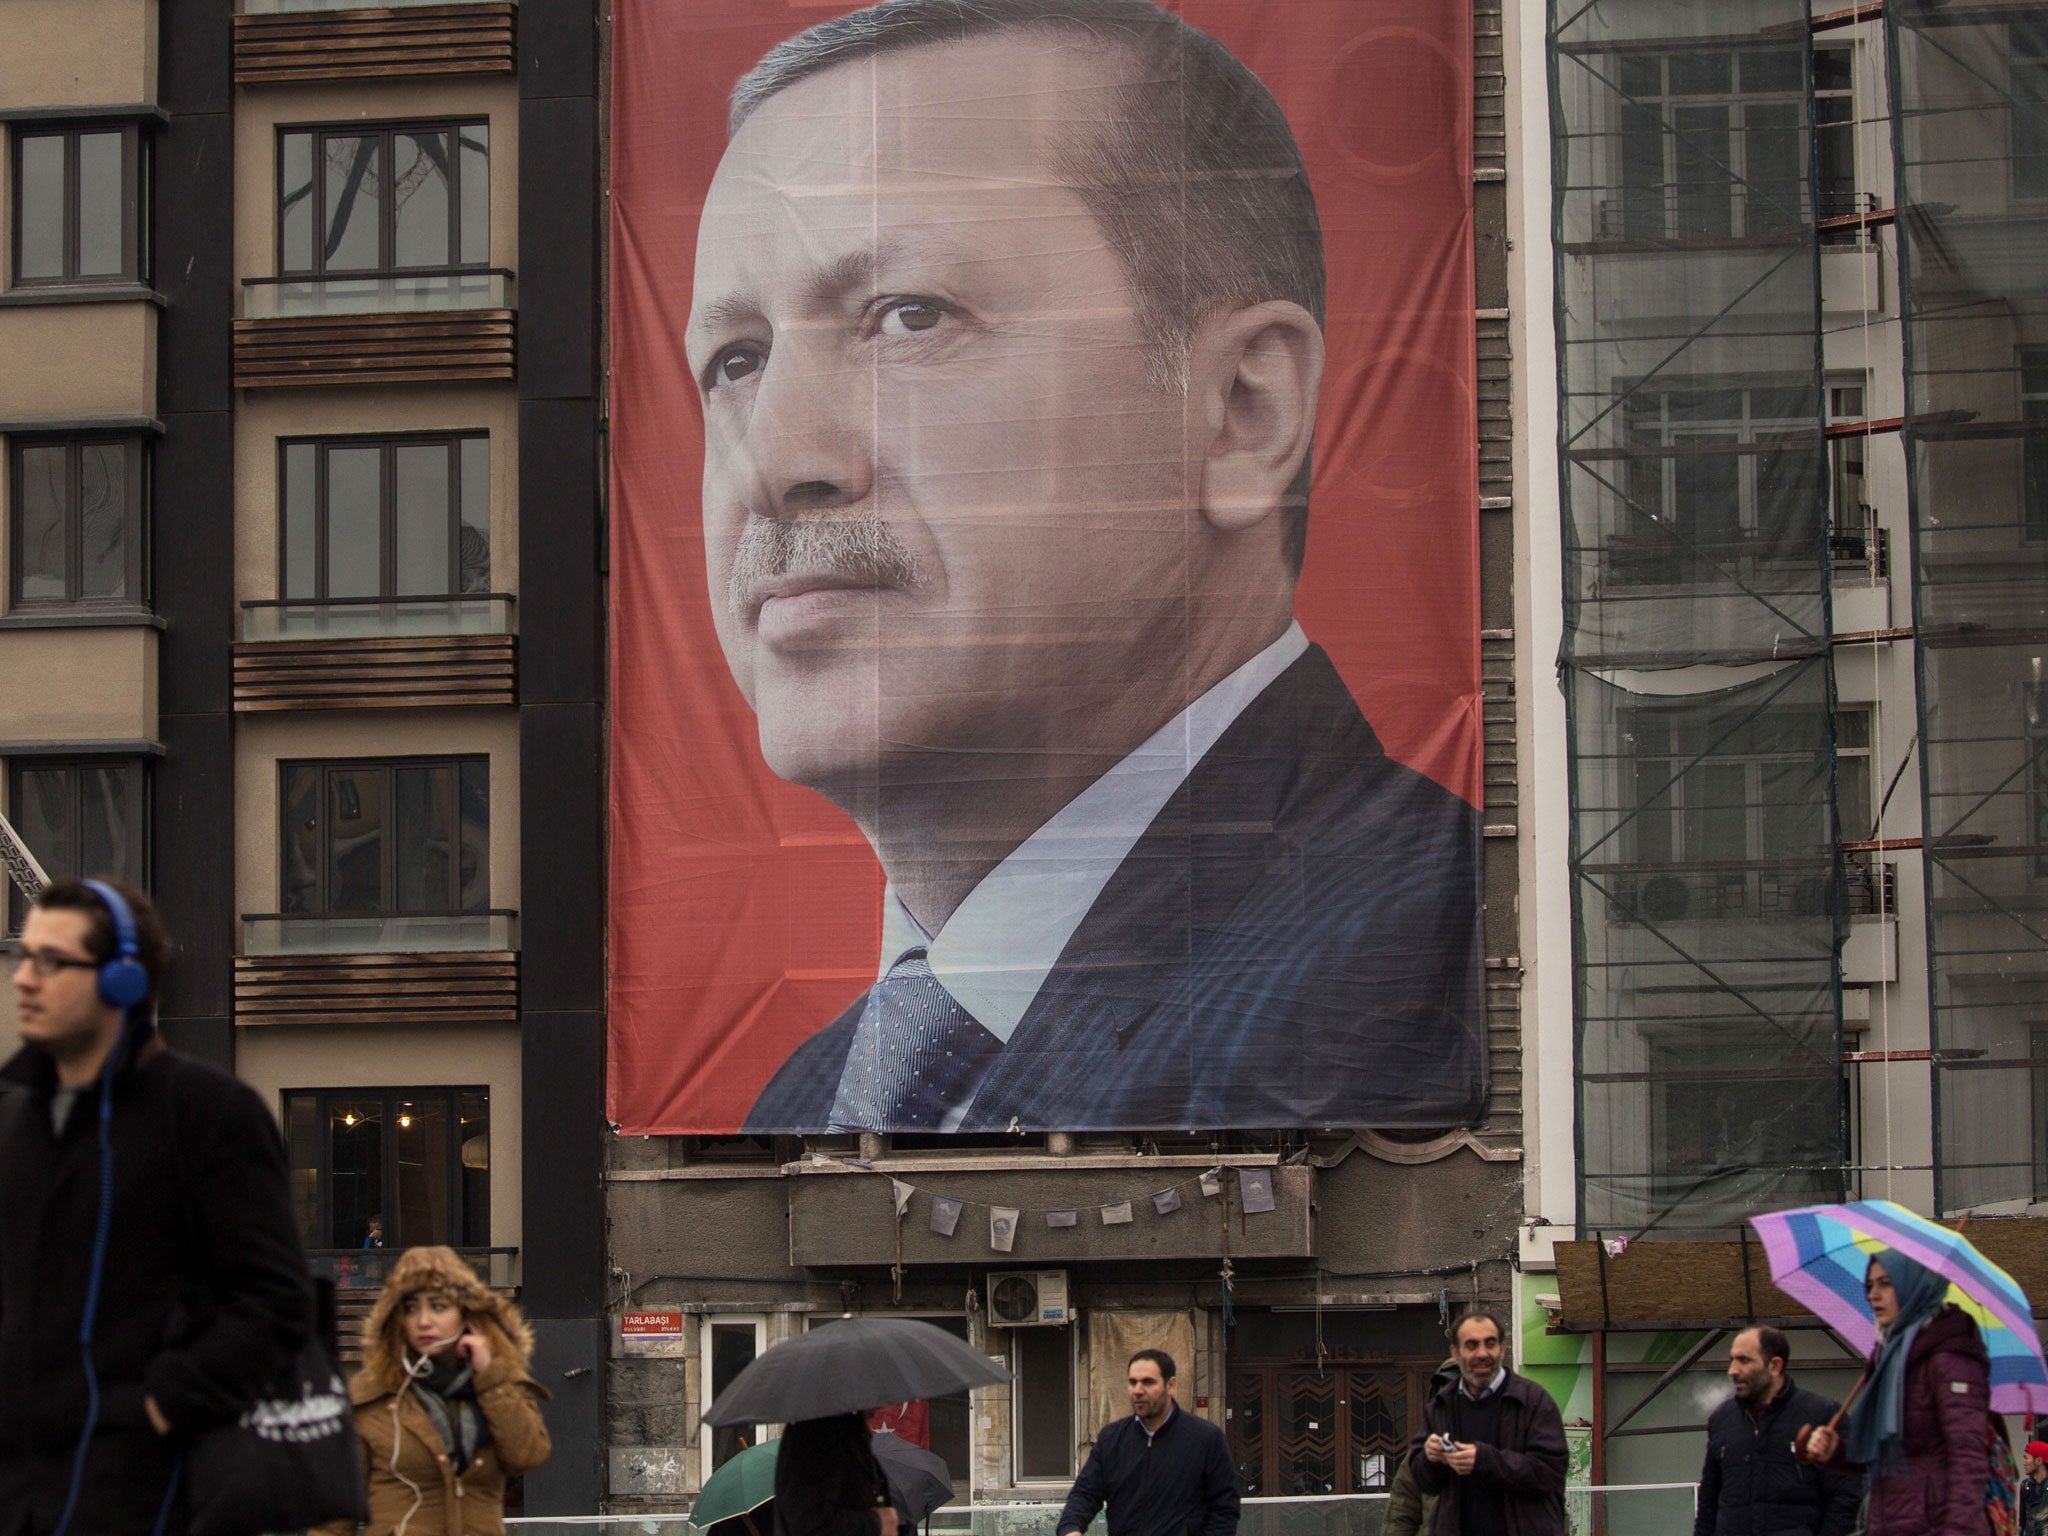 A portrait of Erdogan in Taksim Square, Istanbul